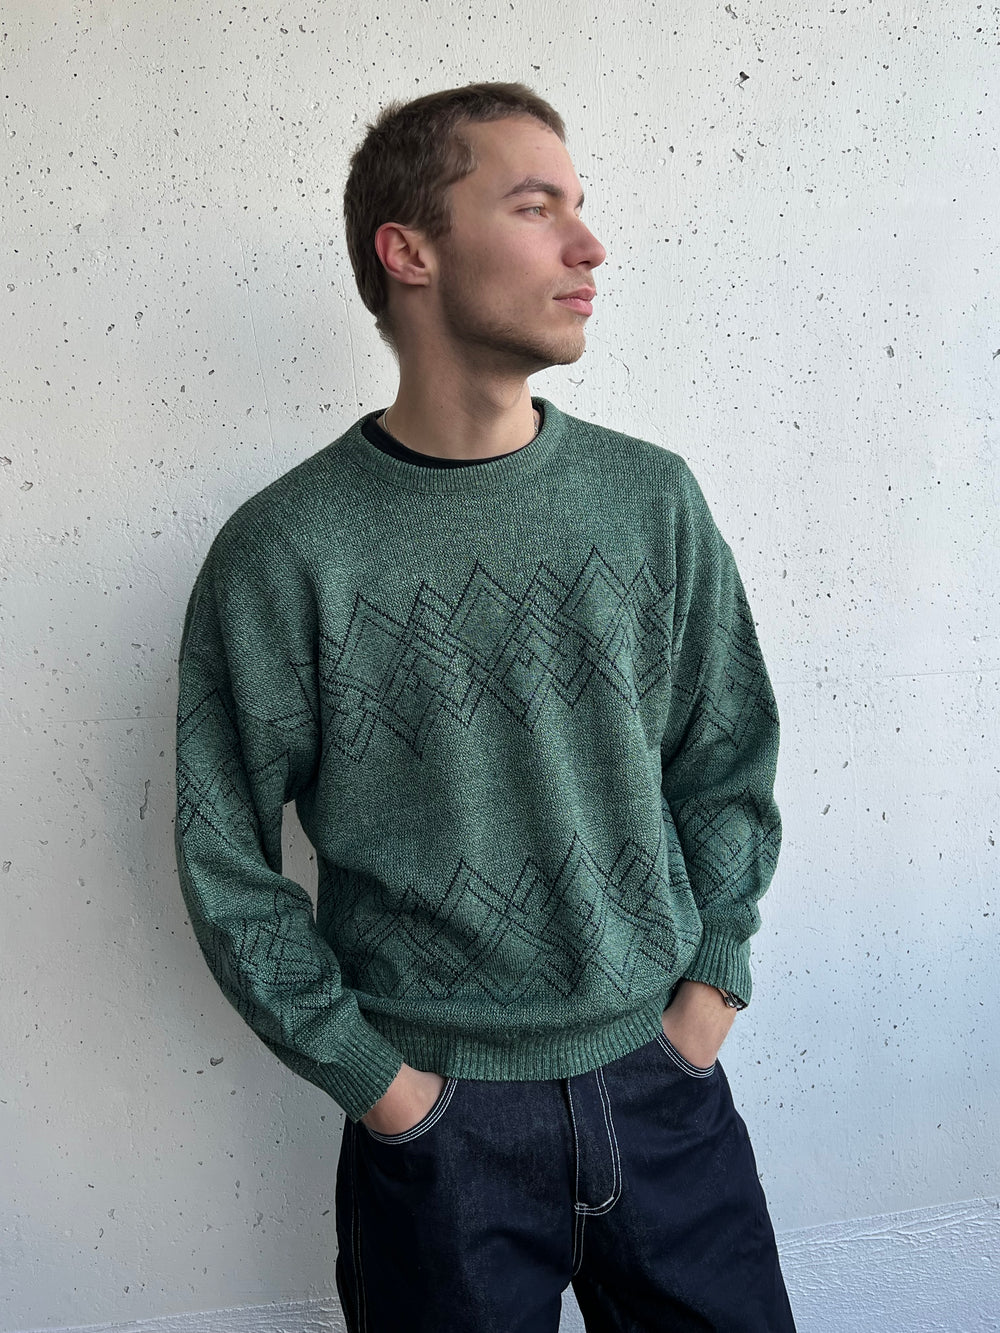 Vintage 80s Knit Sweater (M)